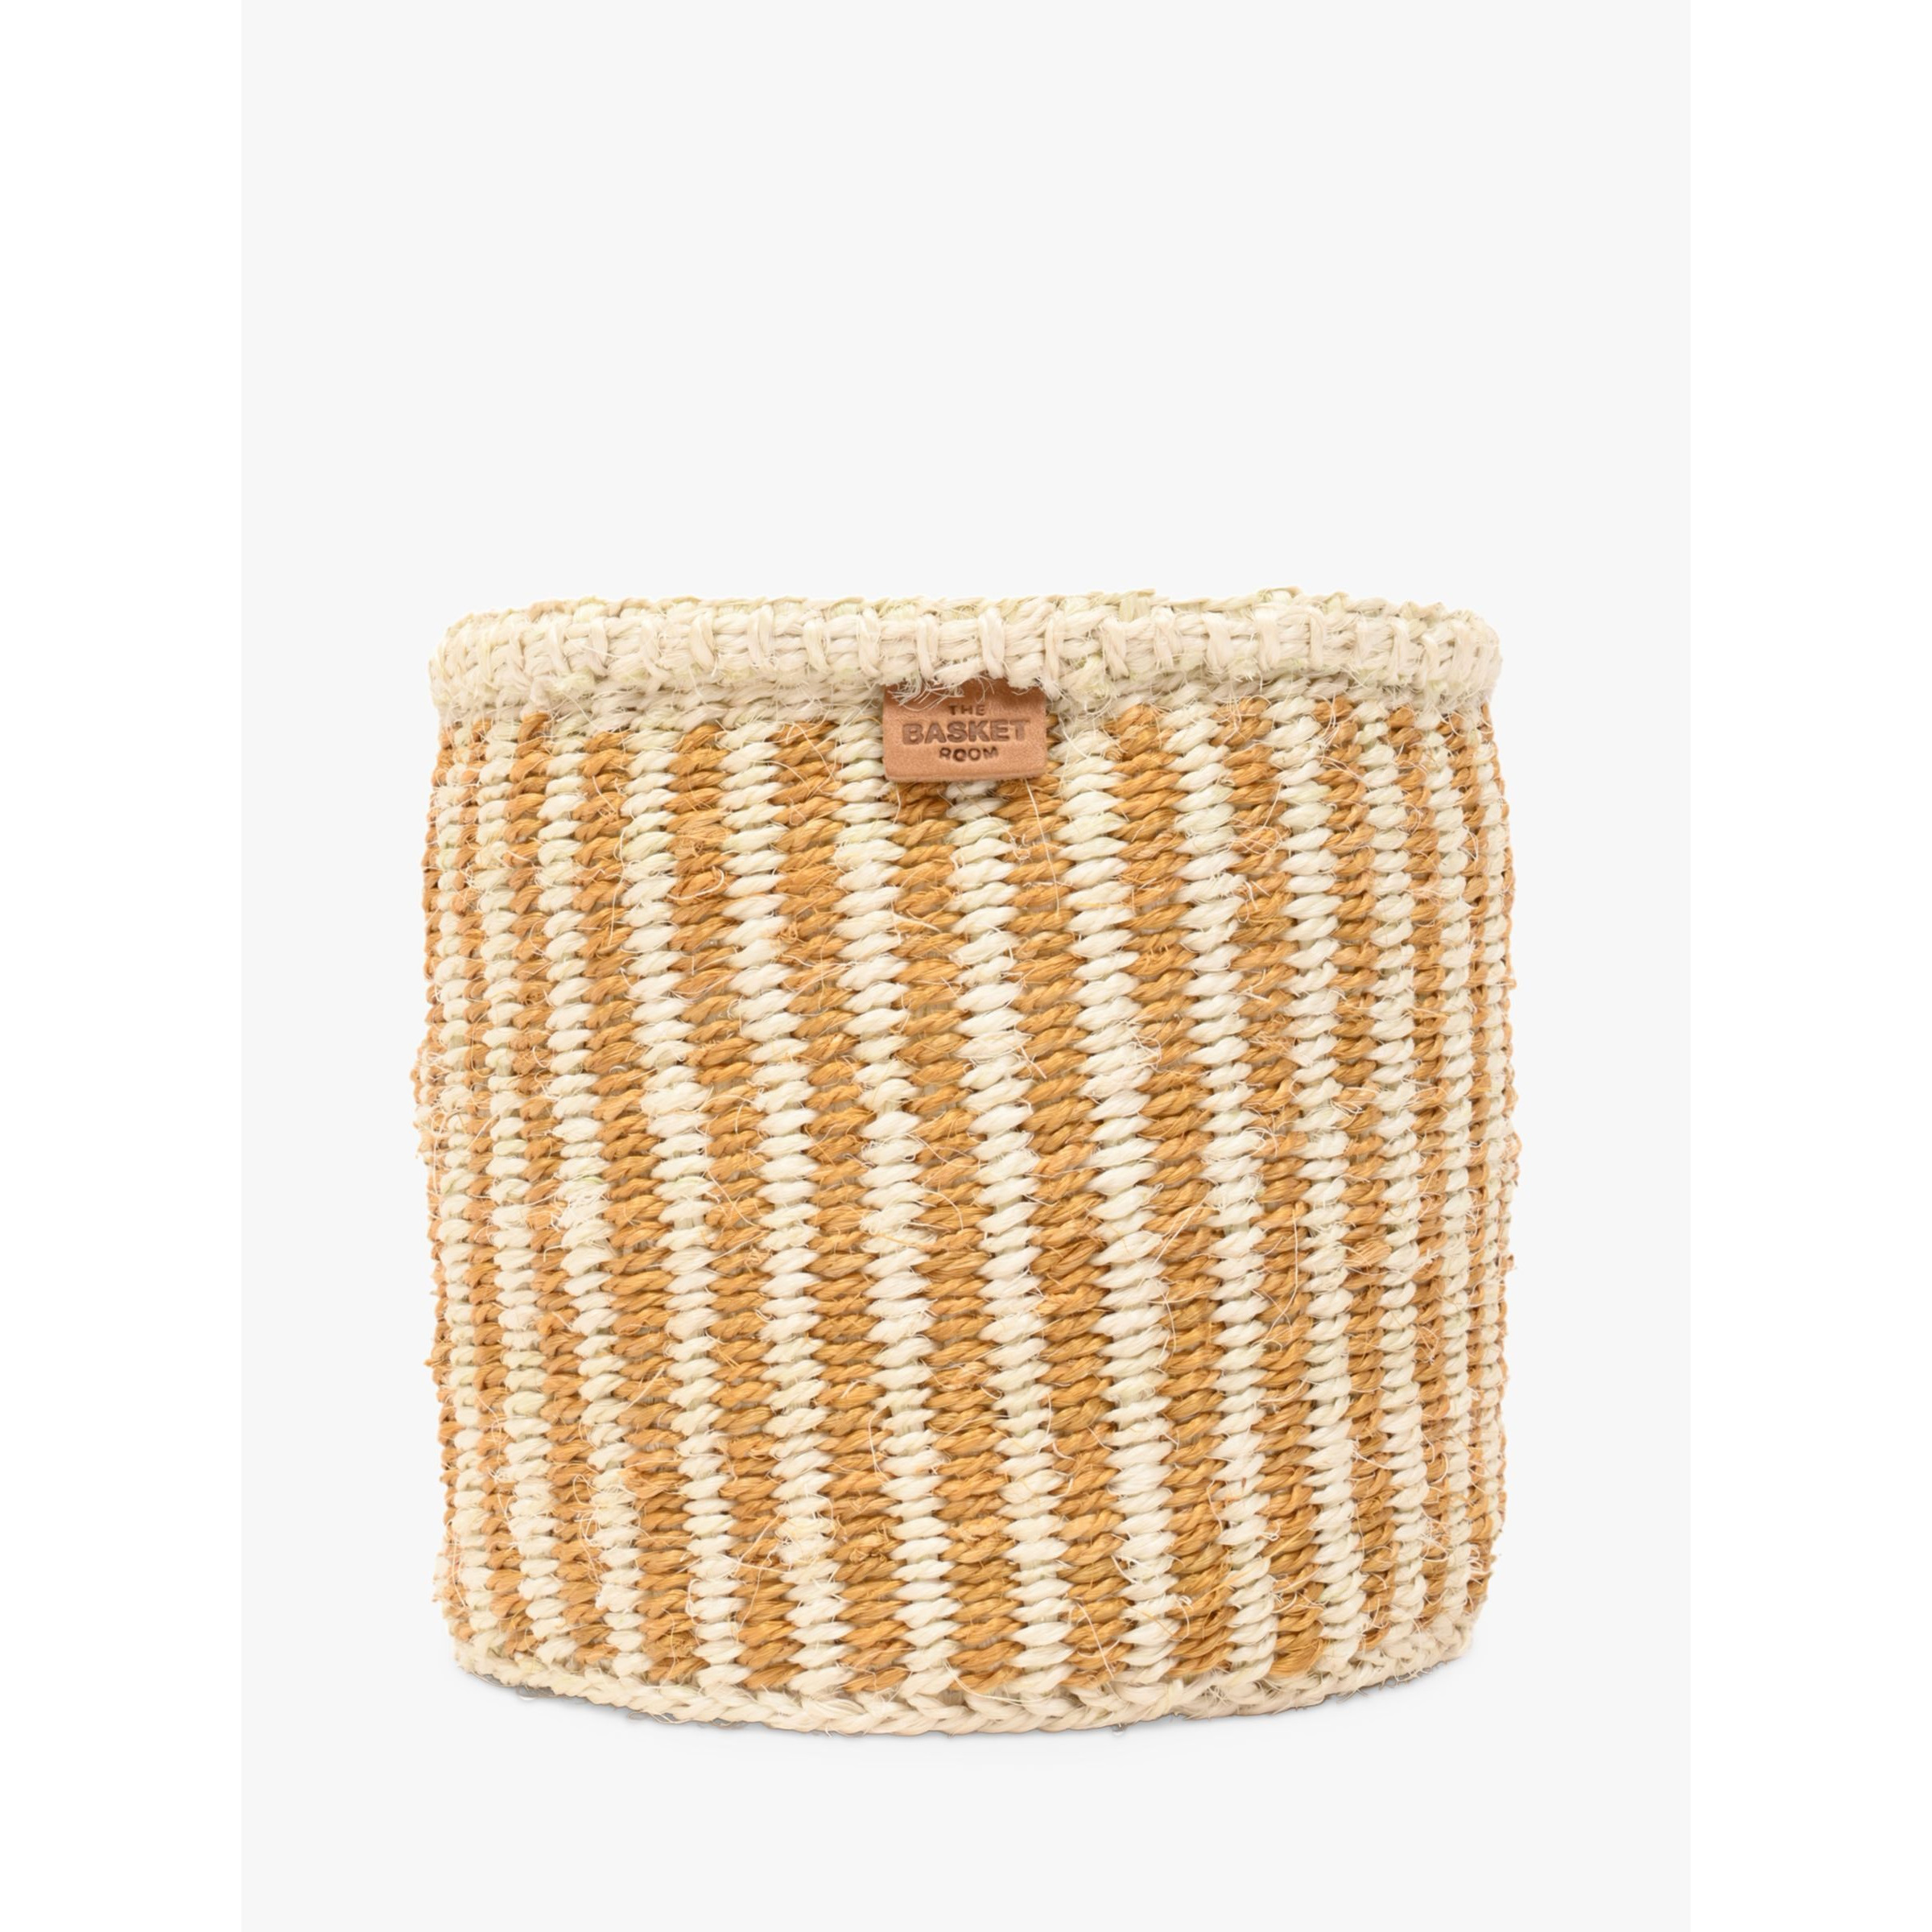 The Basket Room Hotuba Woven Storage Basket, Gold Stripe, Small - image 1